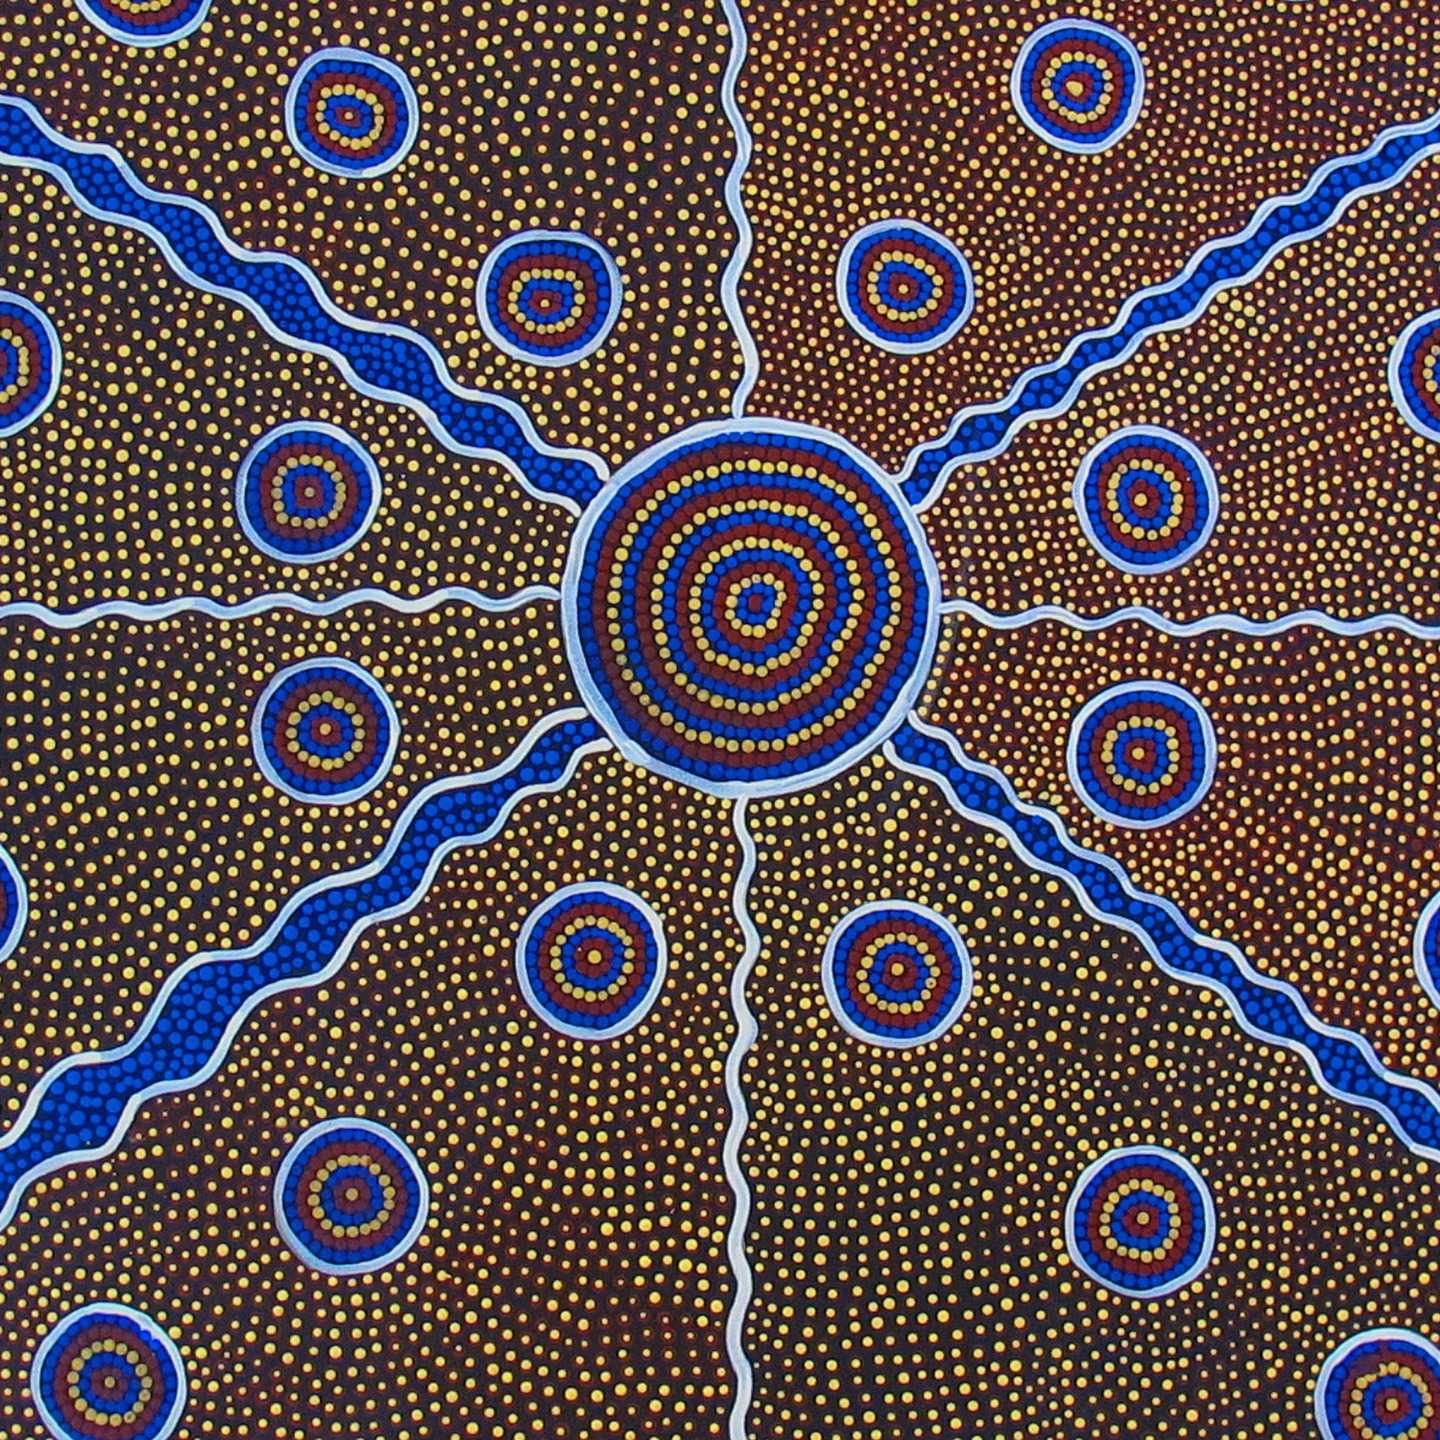 Aboriginal Day Image